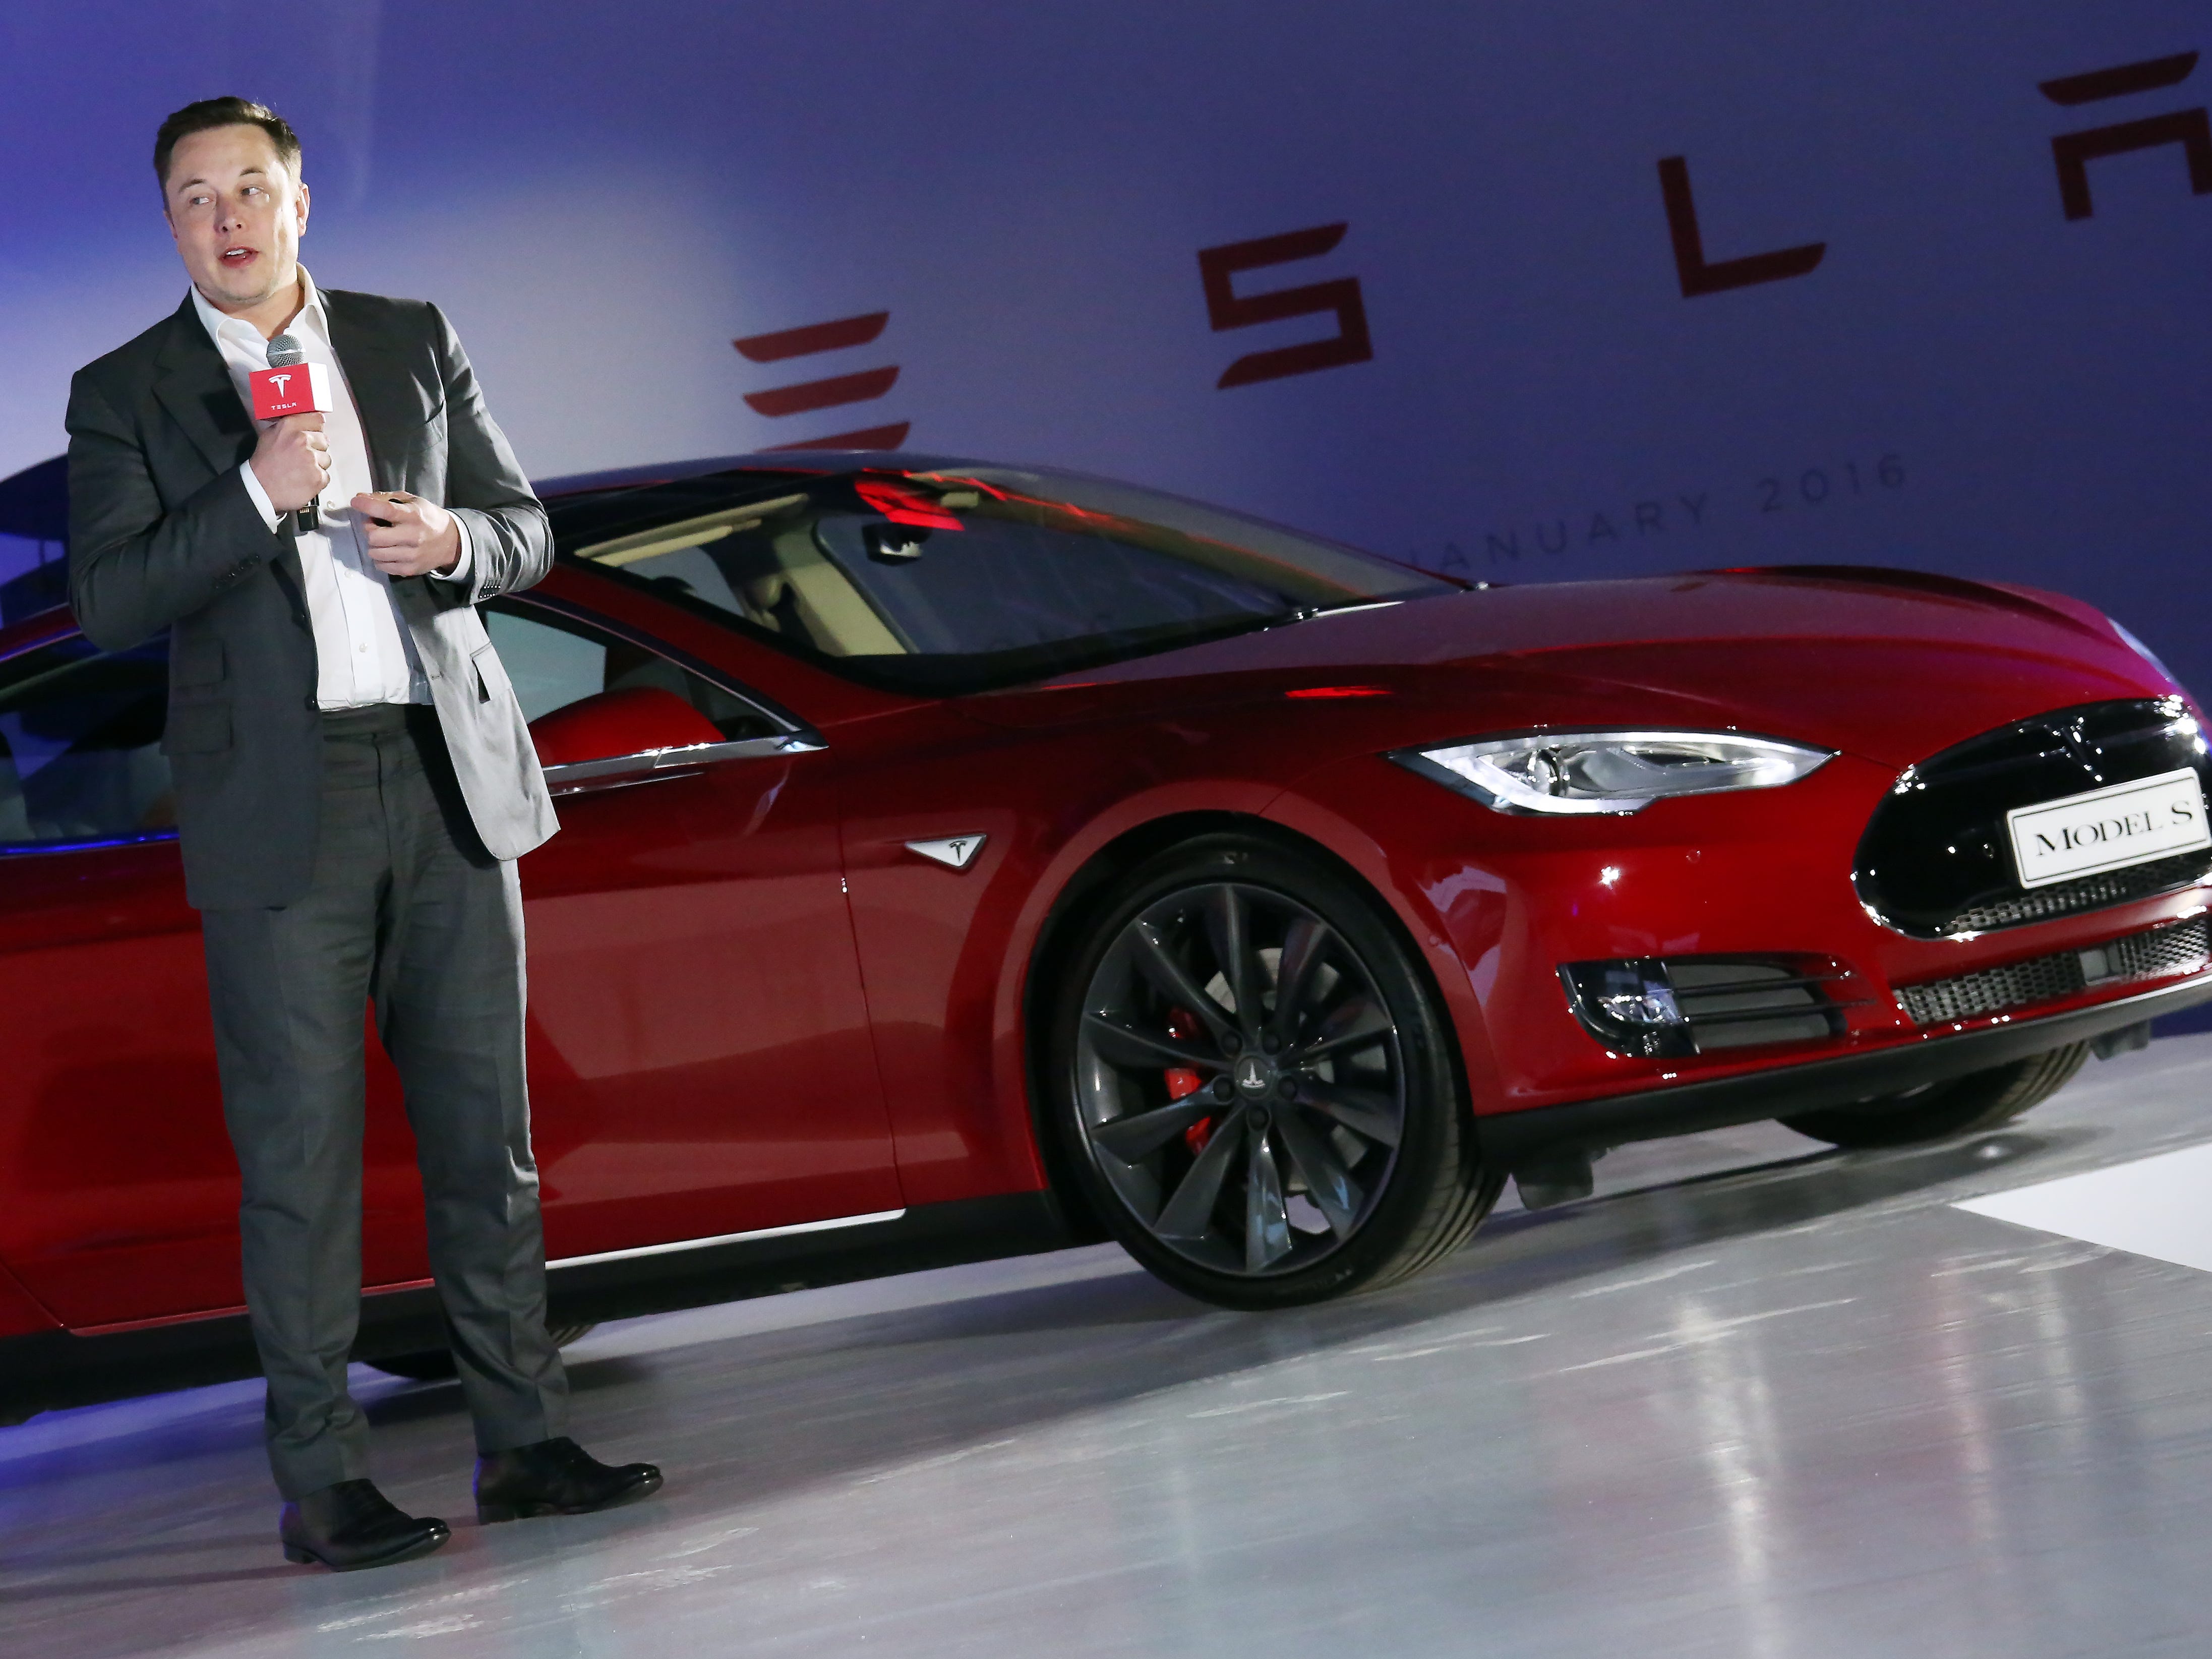 CEO Tesla Motors Elon Musk berbicara kepada media di samping Model S-nya di Hong Kong pada 25 Januari 2016.